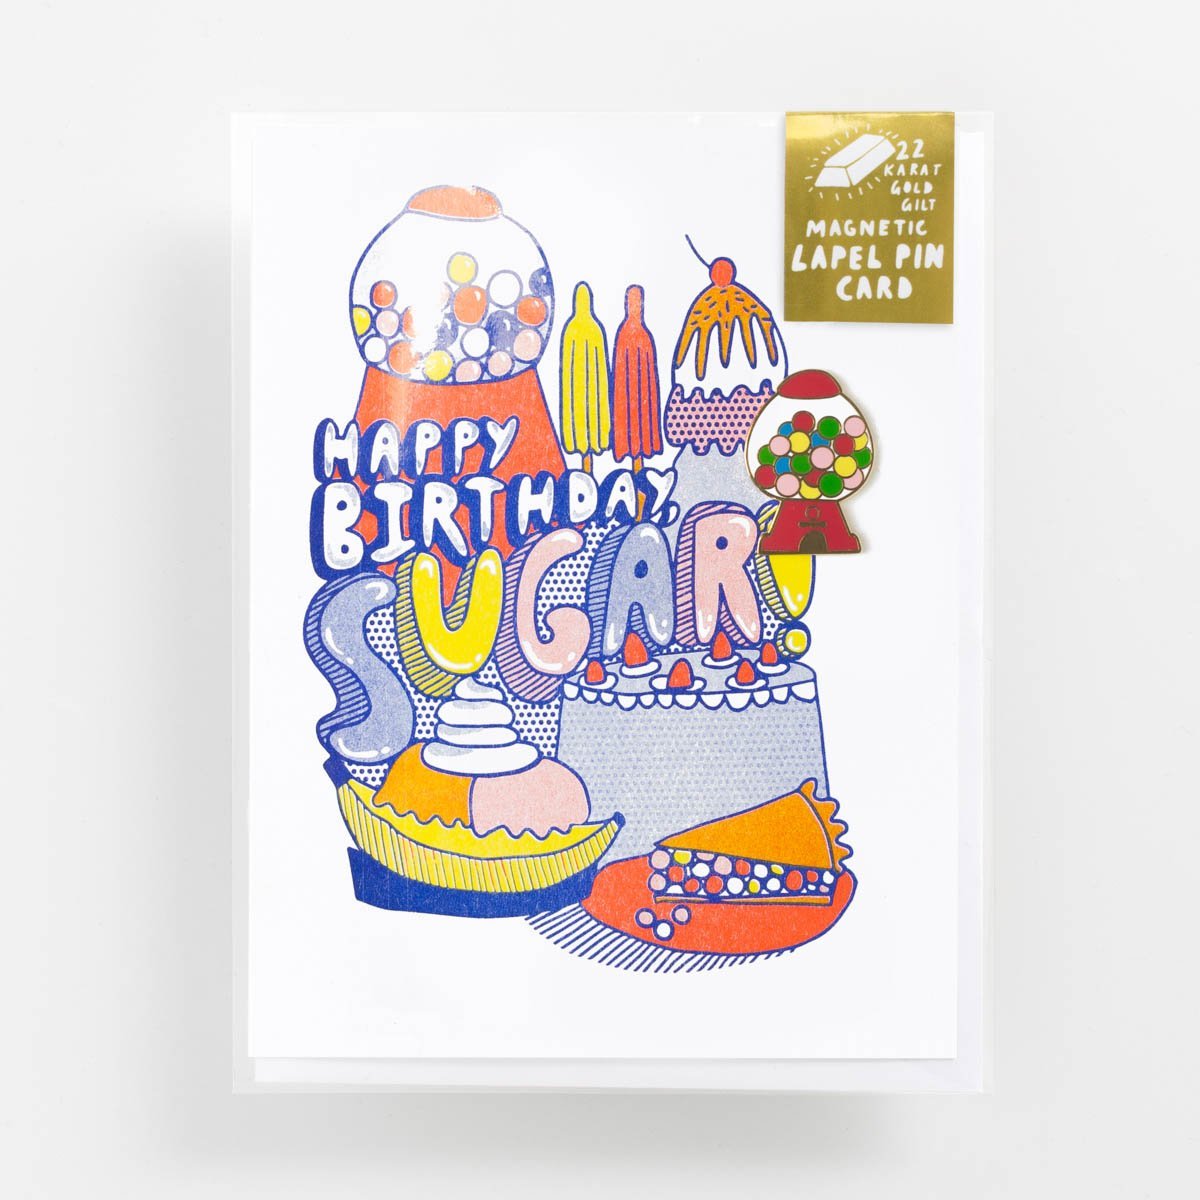 Happy Birthday Sugar - Lapel Pin Card - Yellow Owl Workshop